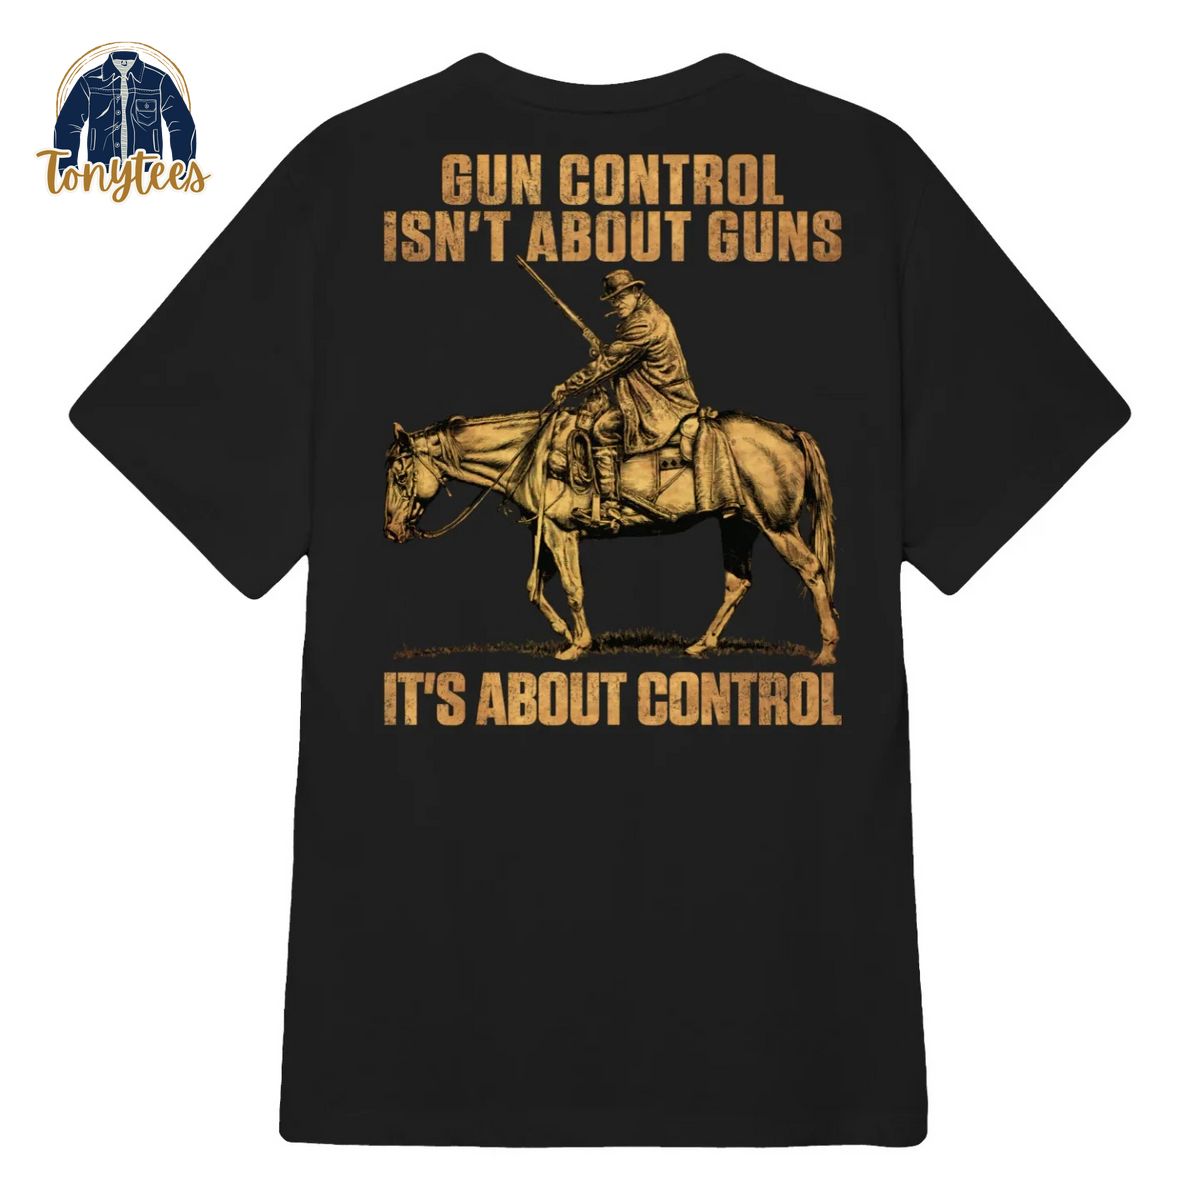 Gun control isn’t about guns it’s about control shirt